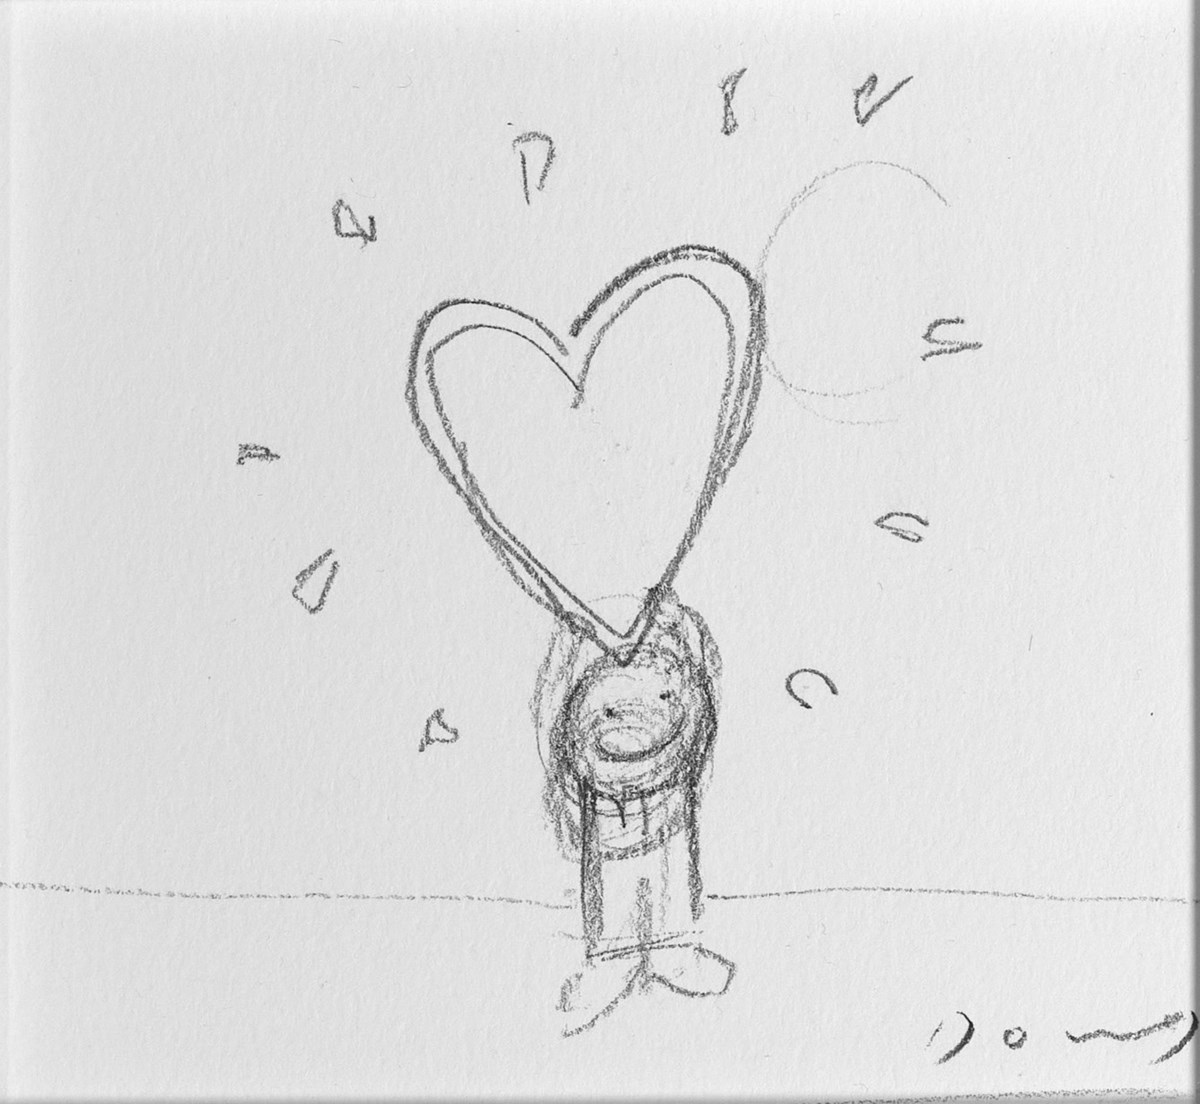 Always Sharing The Love II (Sketch)